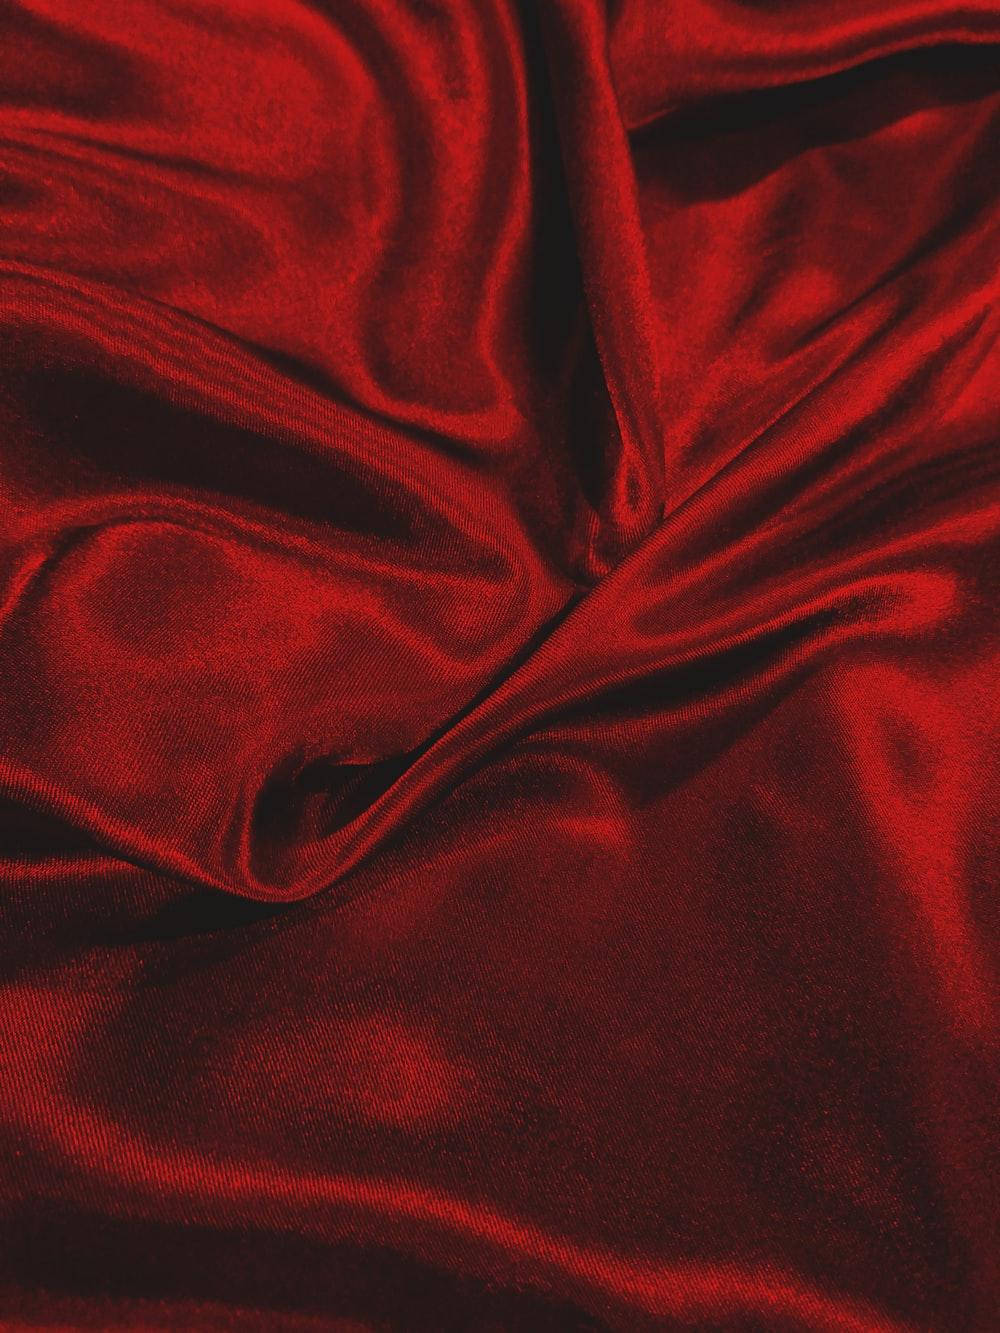 Red Baddie Fabric Background